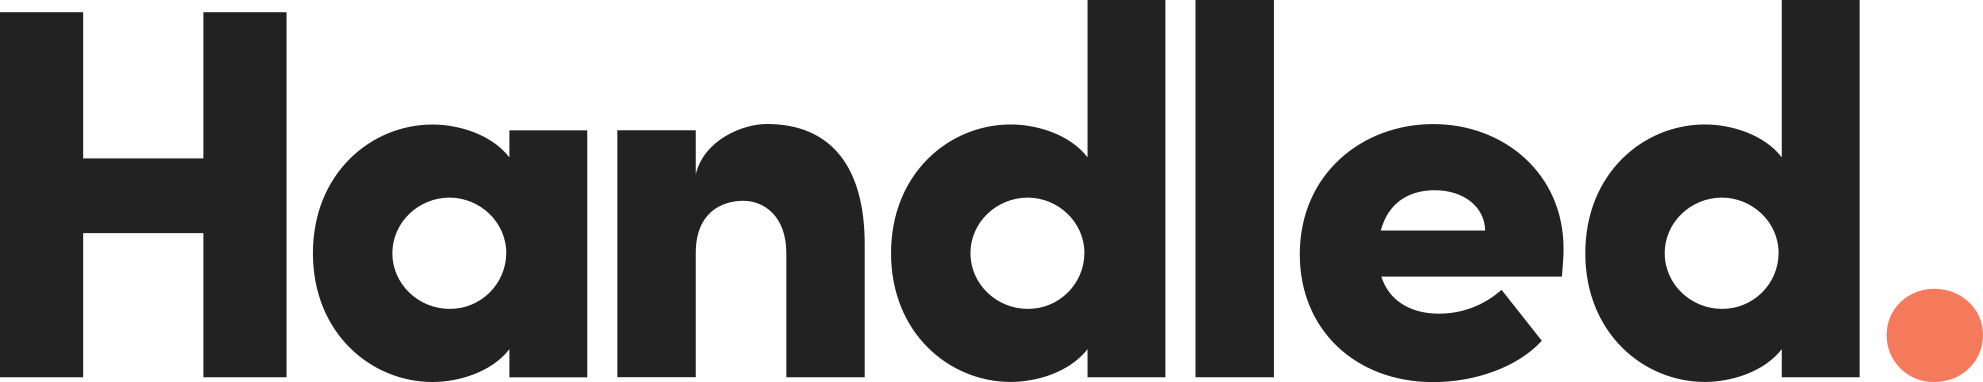 handled logo